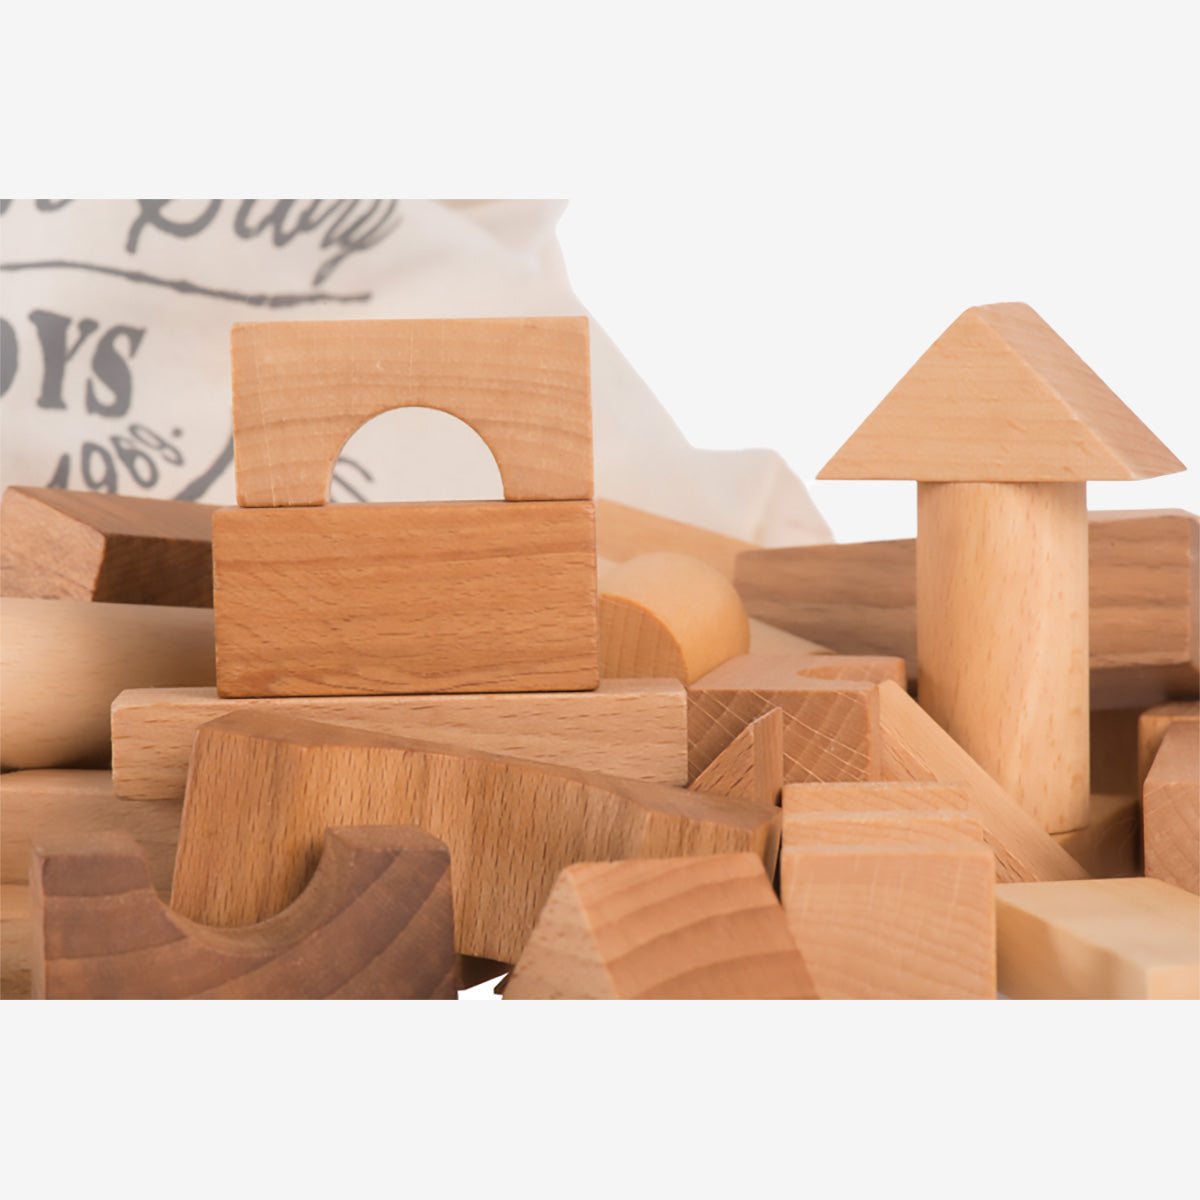 Wooden Story Natural Blocks in Sack - 100 pcs